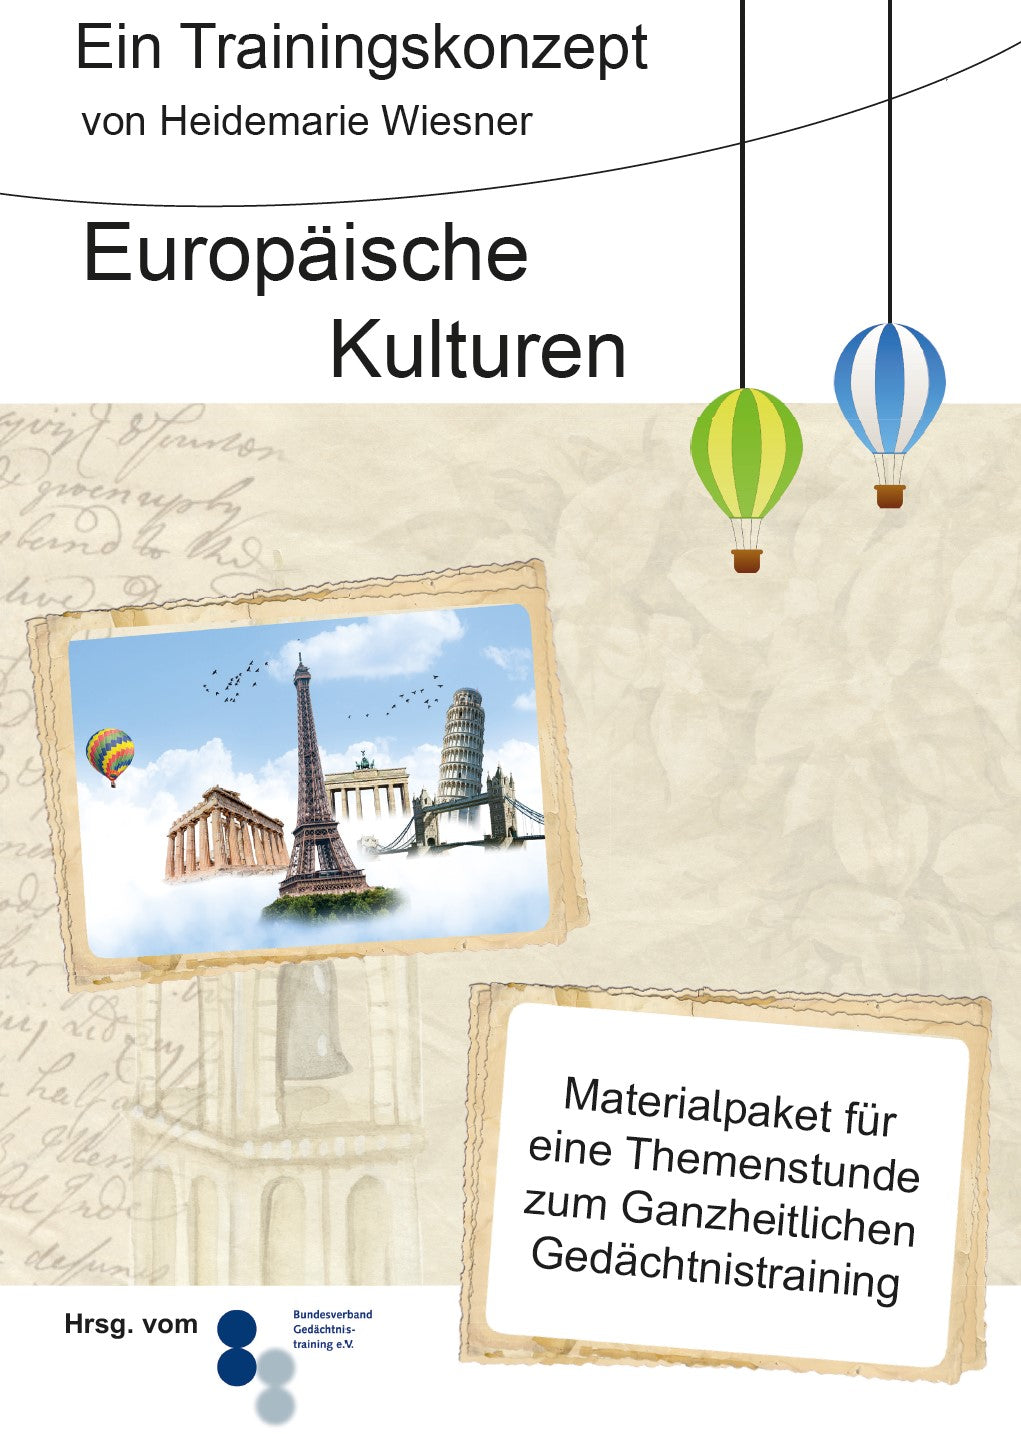 Trainingskonzept "Europäische Kulturen" (PDF)